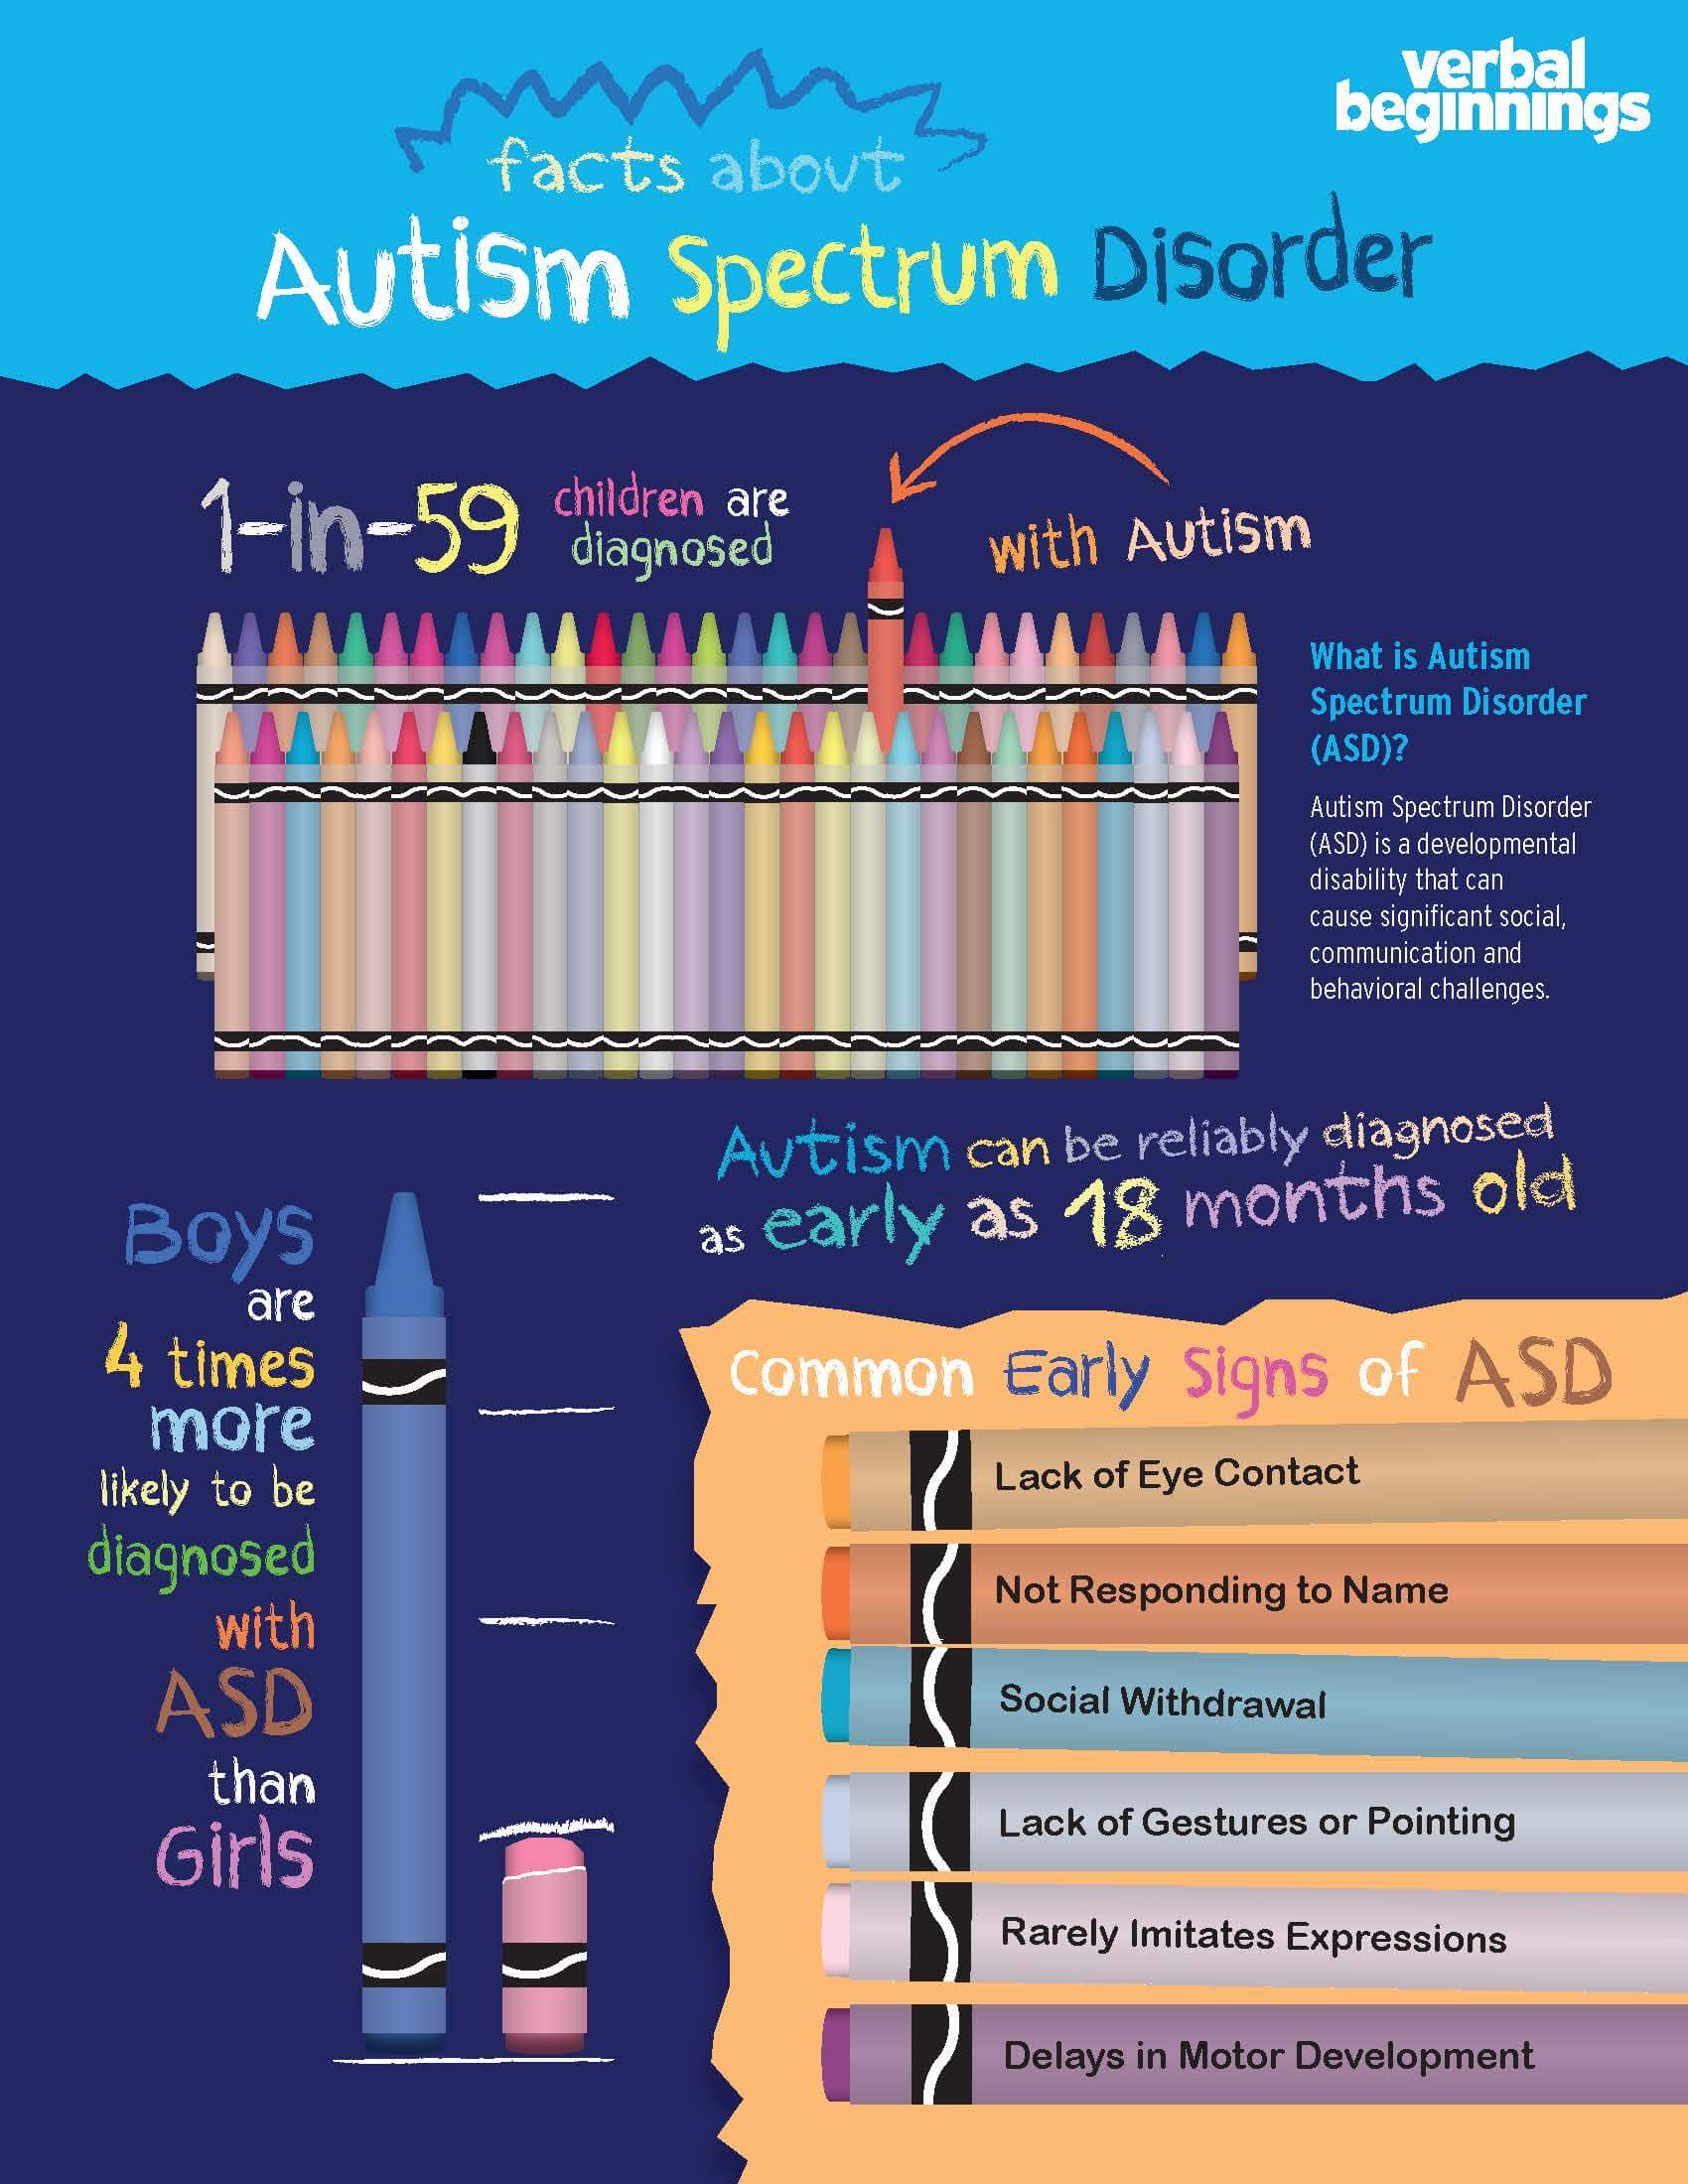 case study of autism spectrum disorder